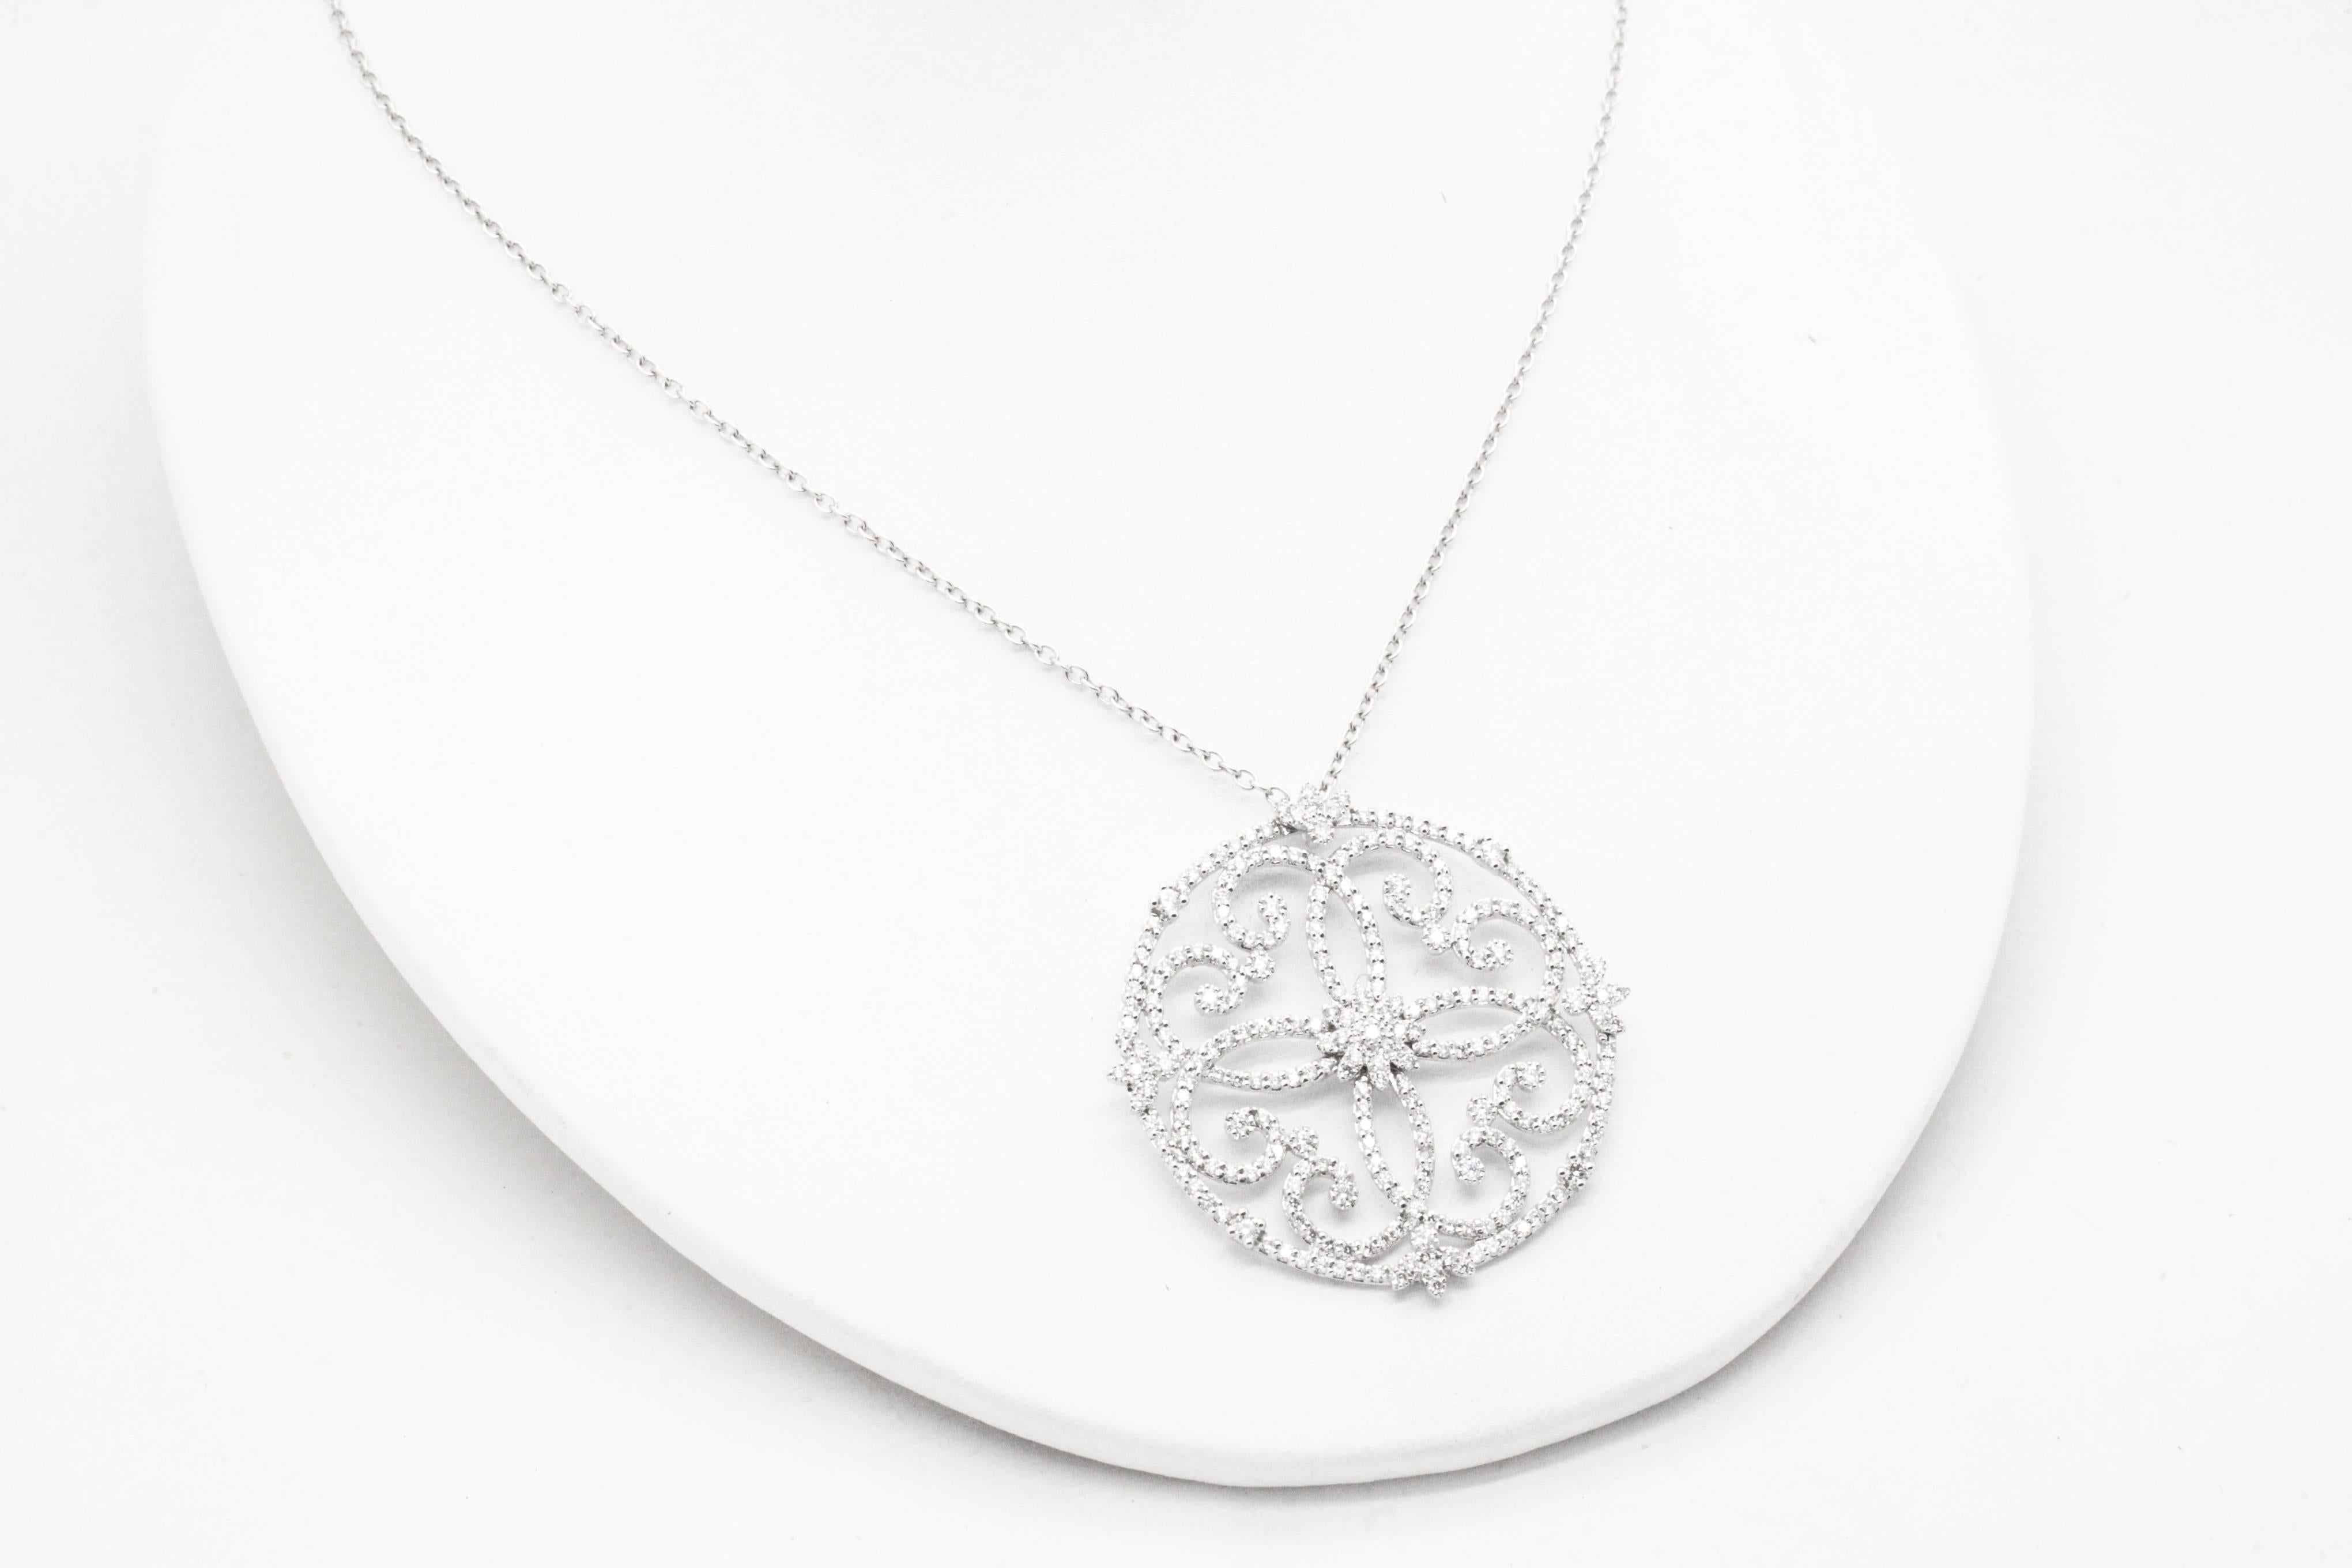 Ferrucci & Co. Diamond Necklace in 18 Karat White Gold, Handmade in Italy 3